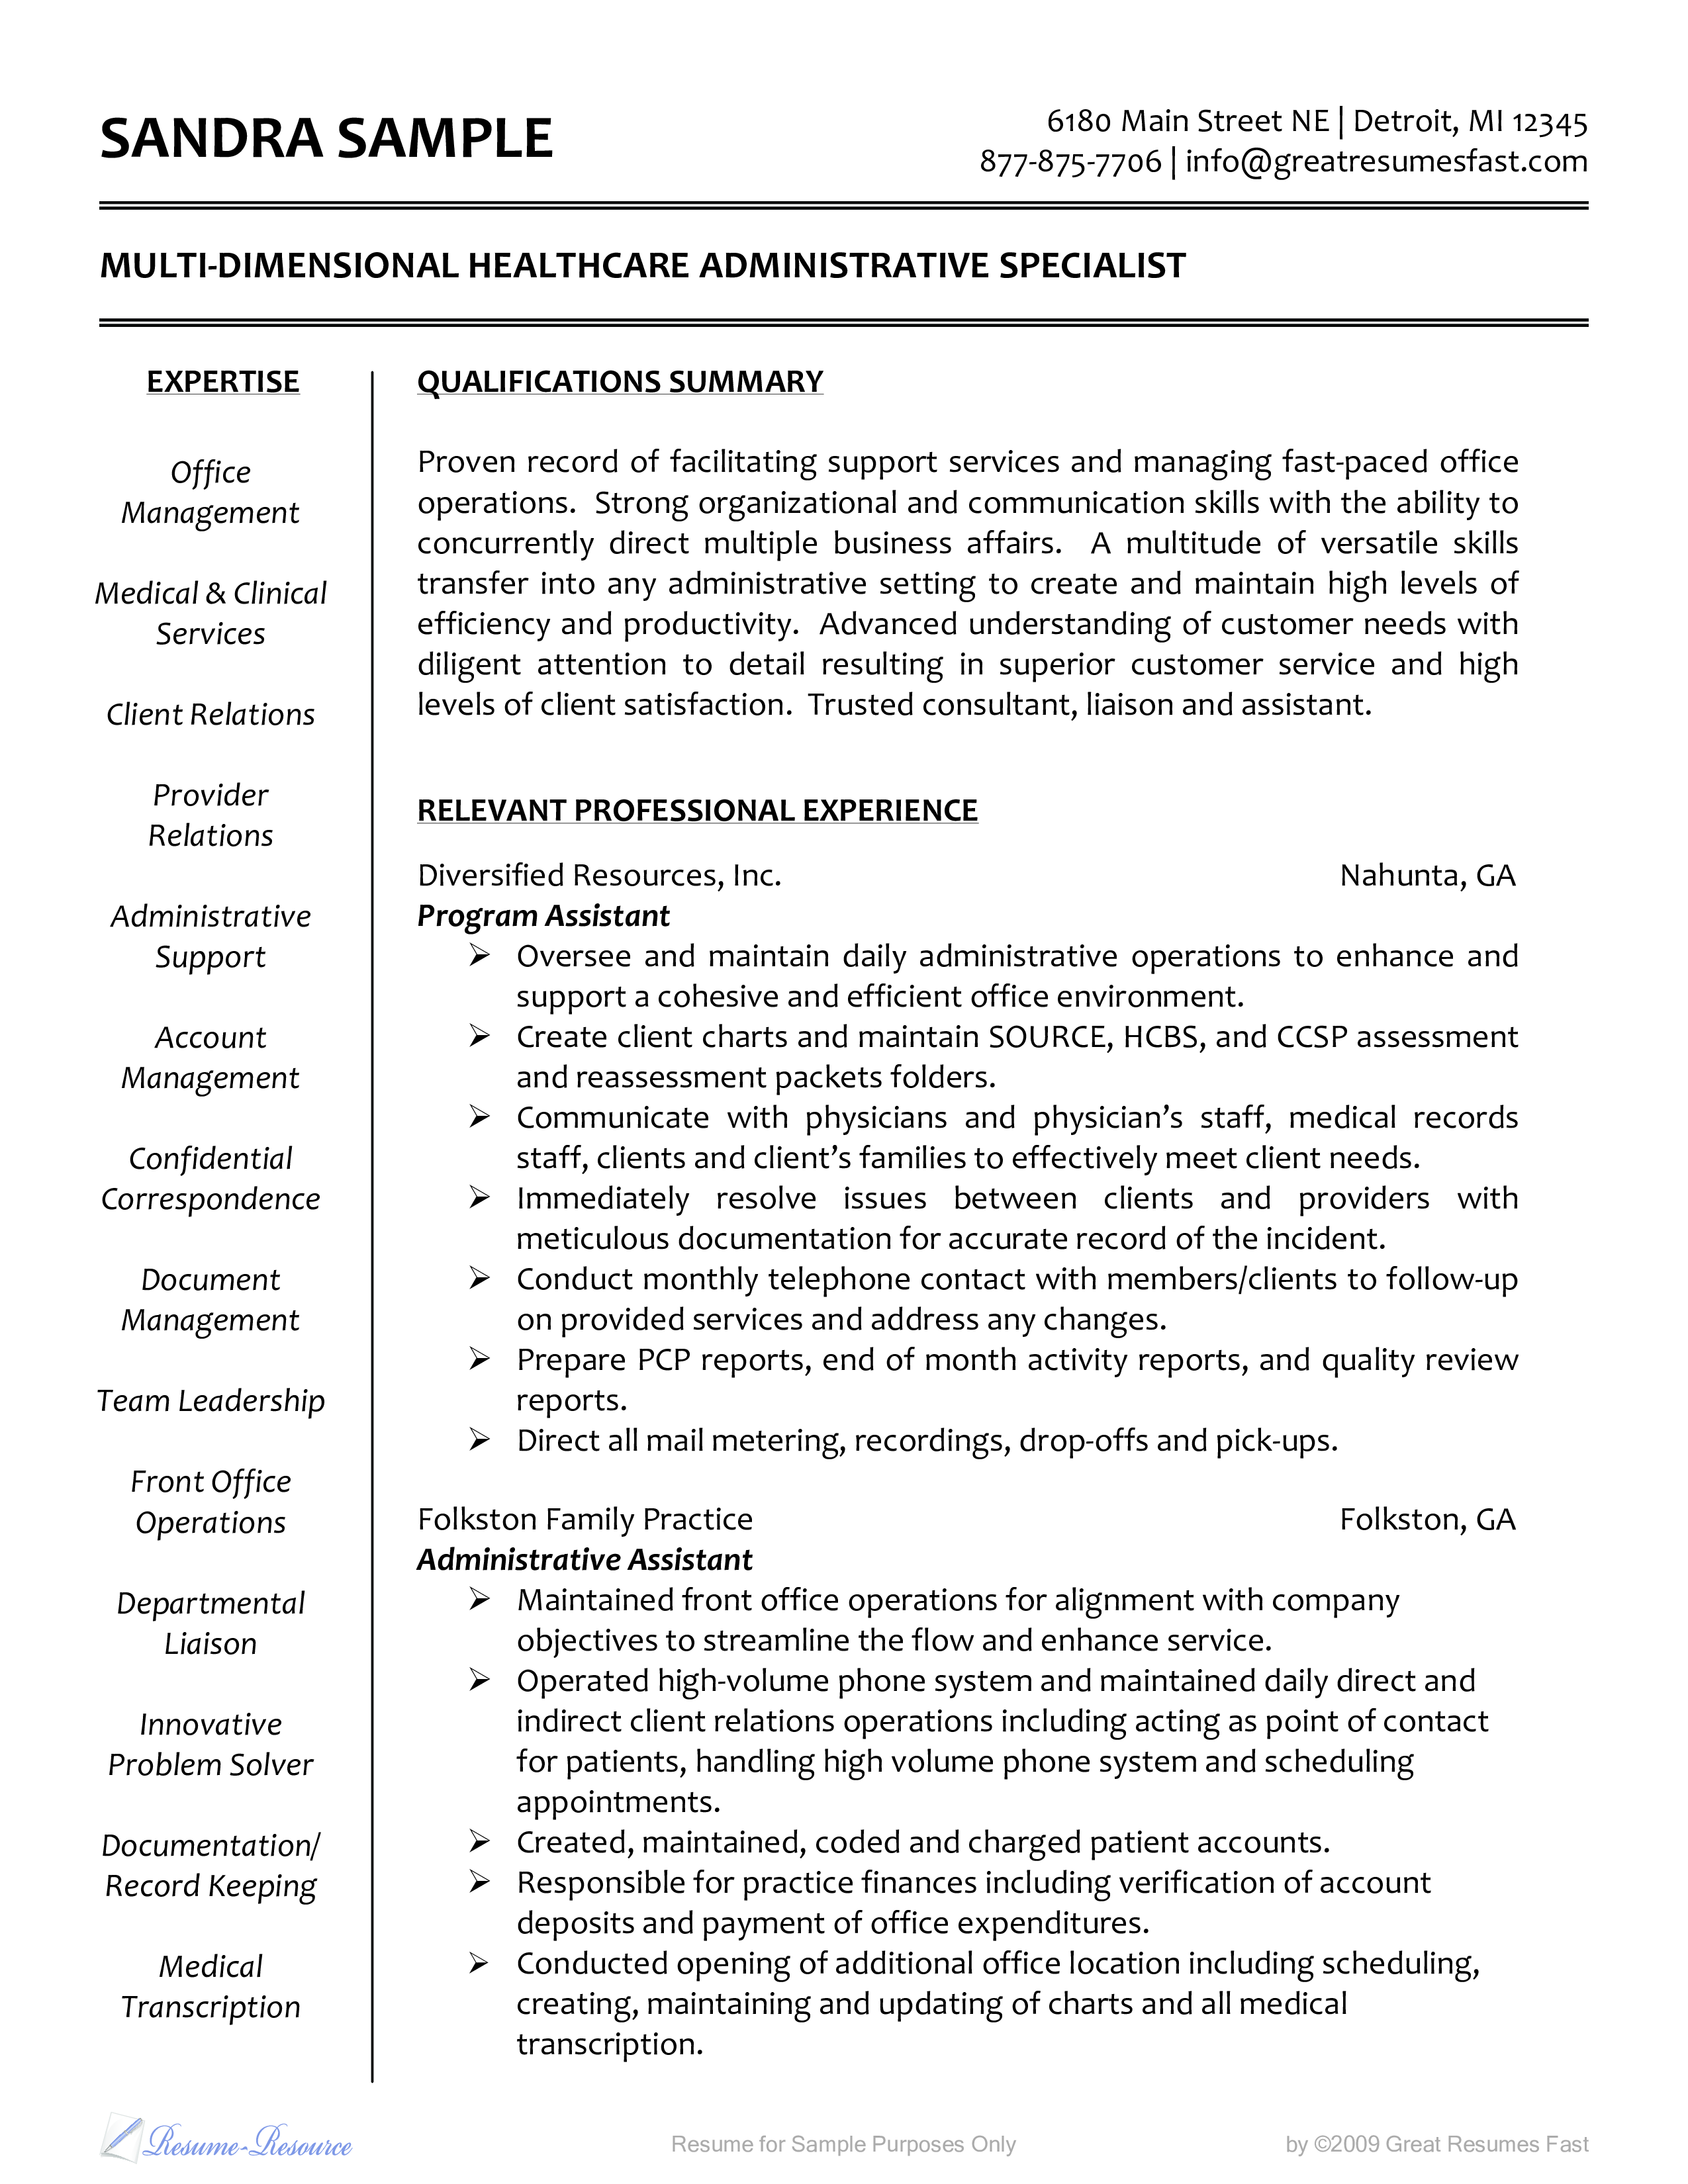 Administrative Resume Sample